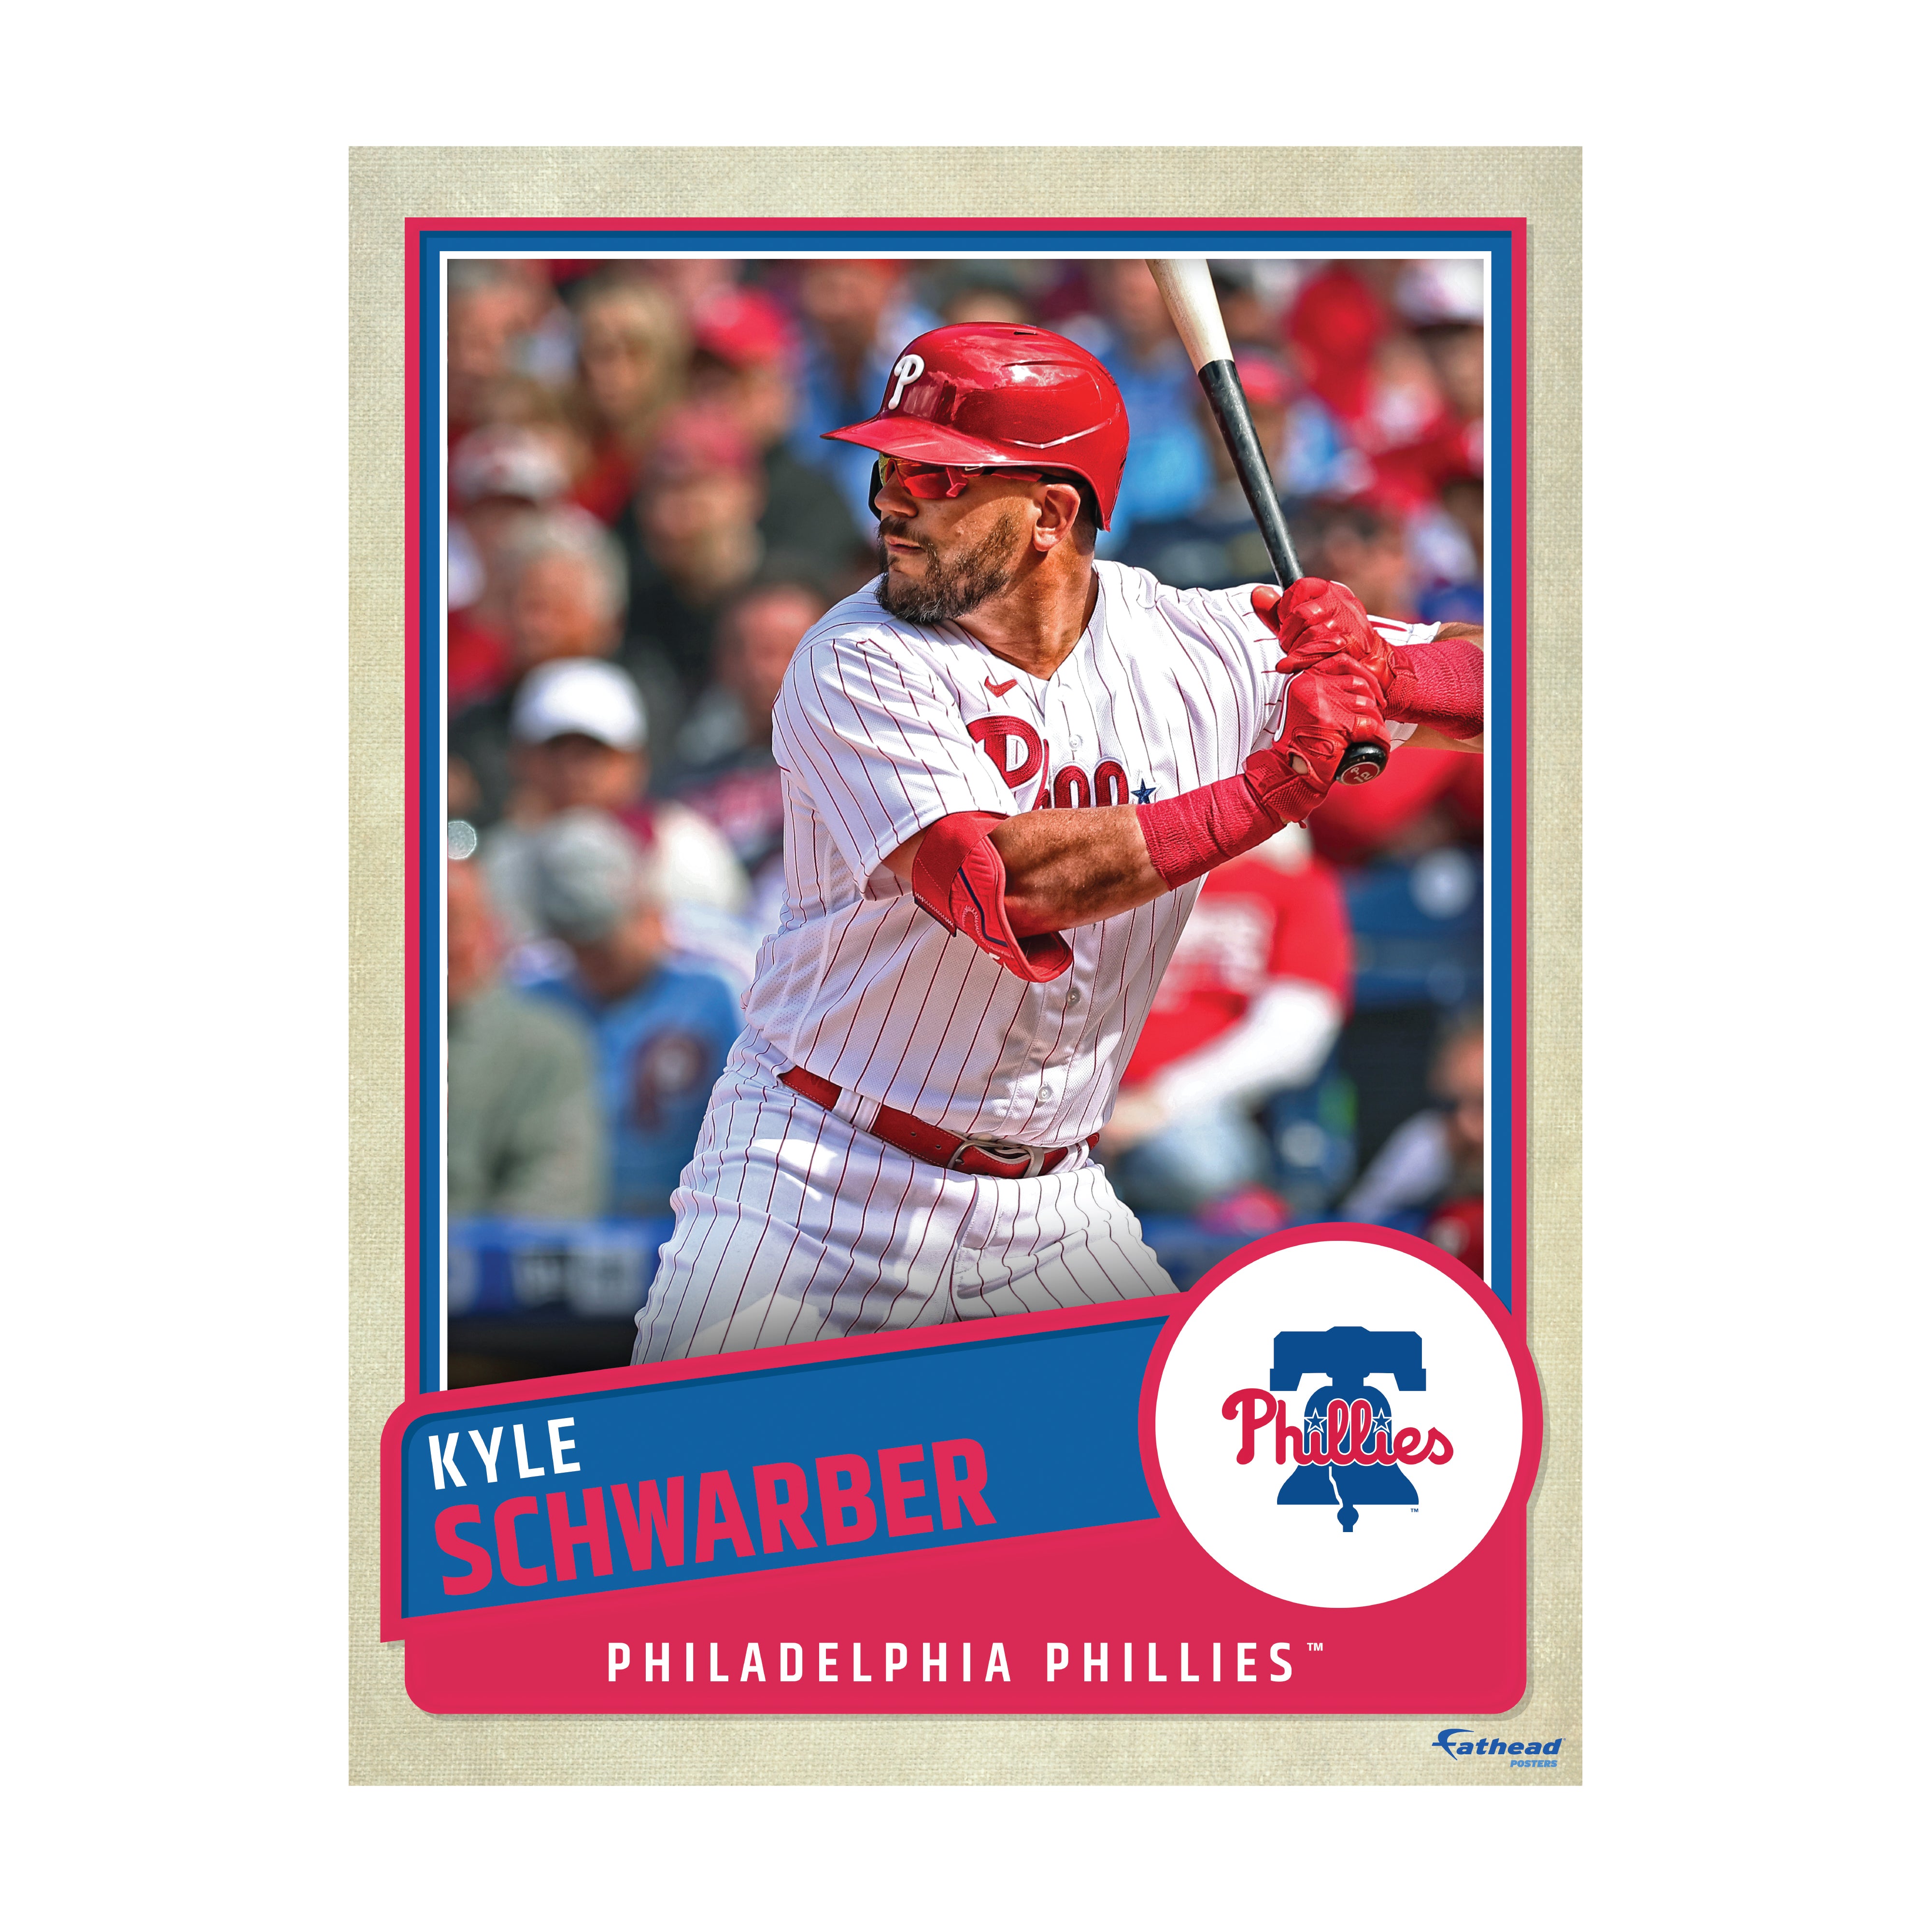 Philadelphia Phillies: Kyle Schwarber 2022 Poster - Officially License